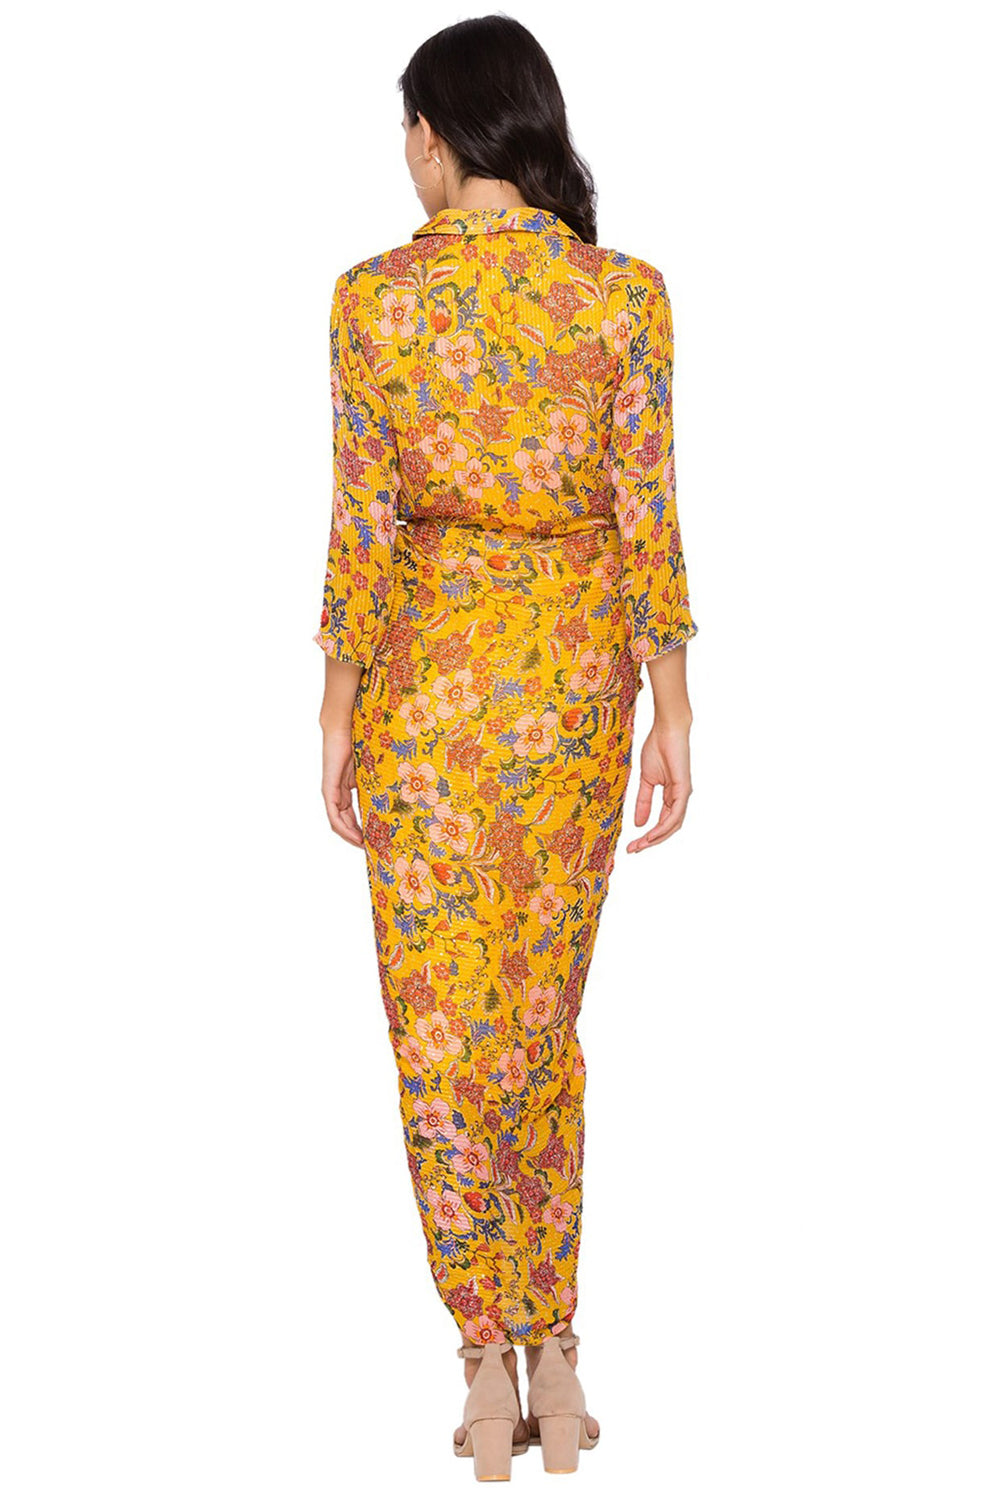 Azalea Floral Overlap Printed Drape Dress With Side Tie Up